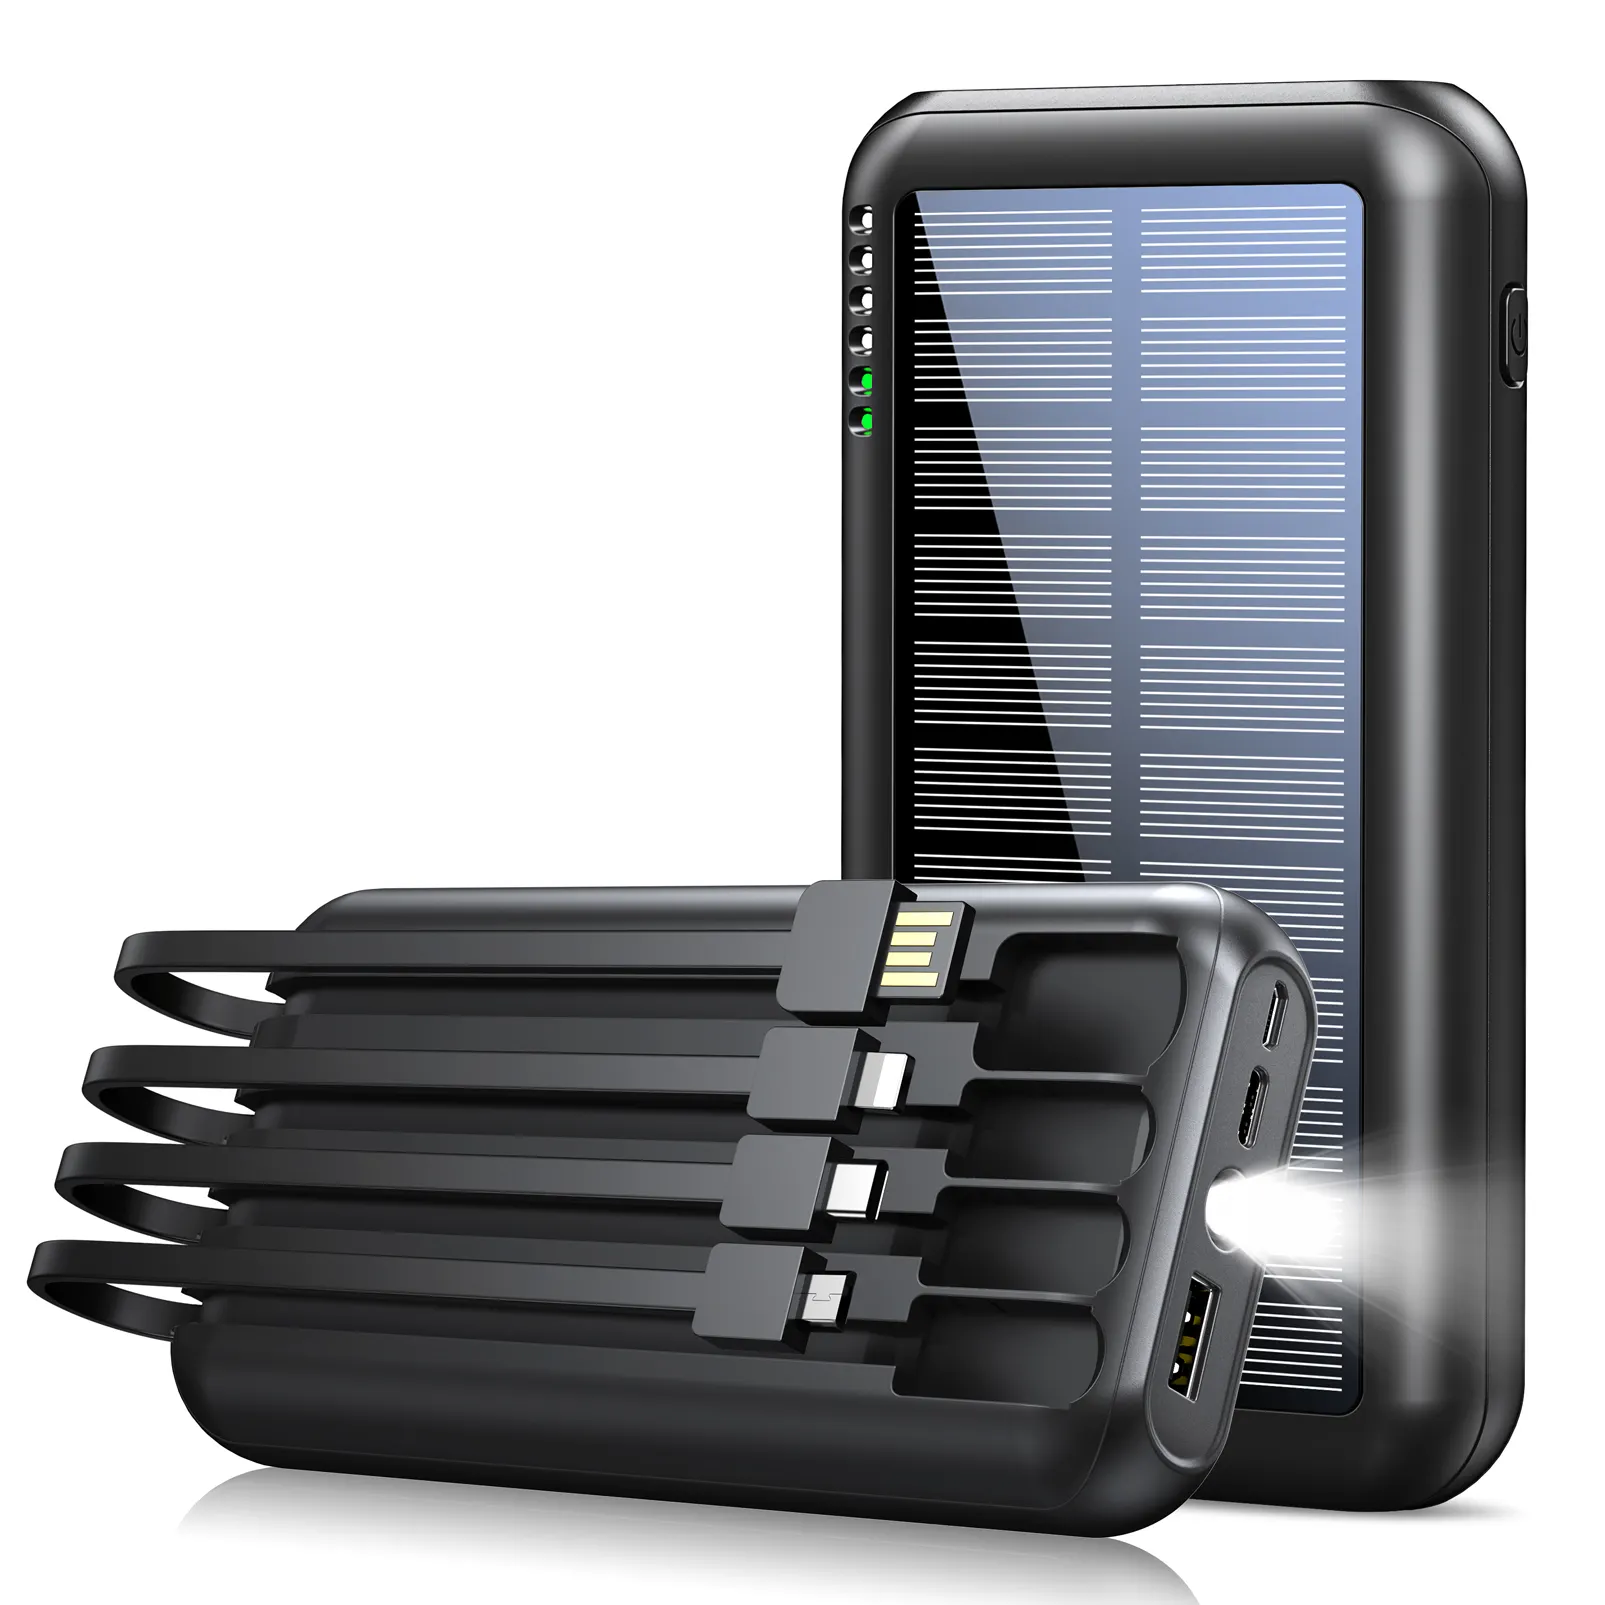 2 Usb портативное зарядное устройство для телефона, солнечное зарядное устройство